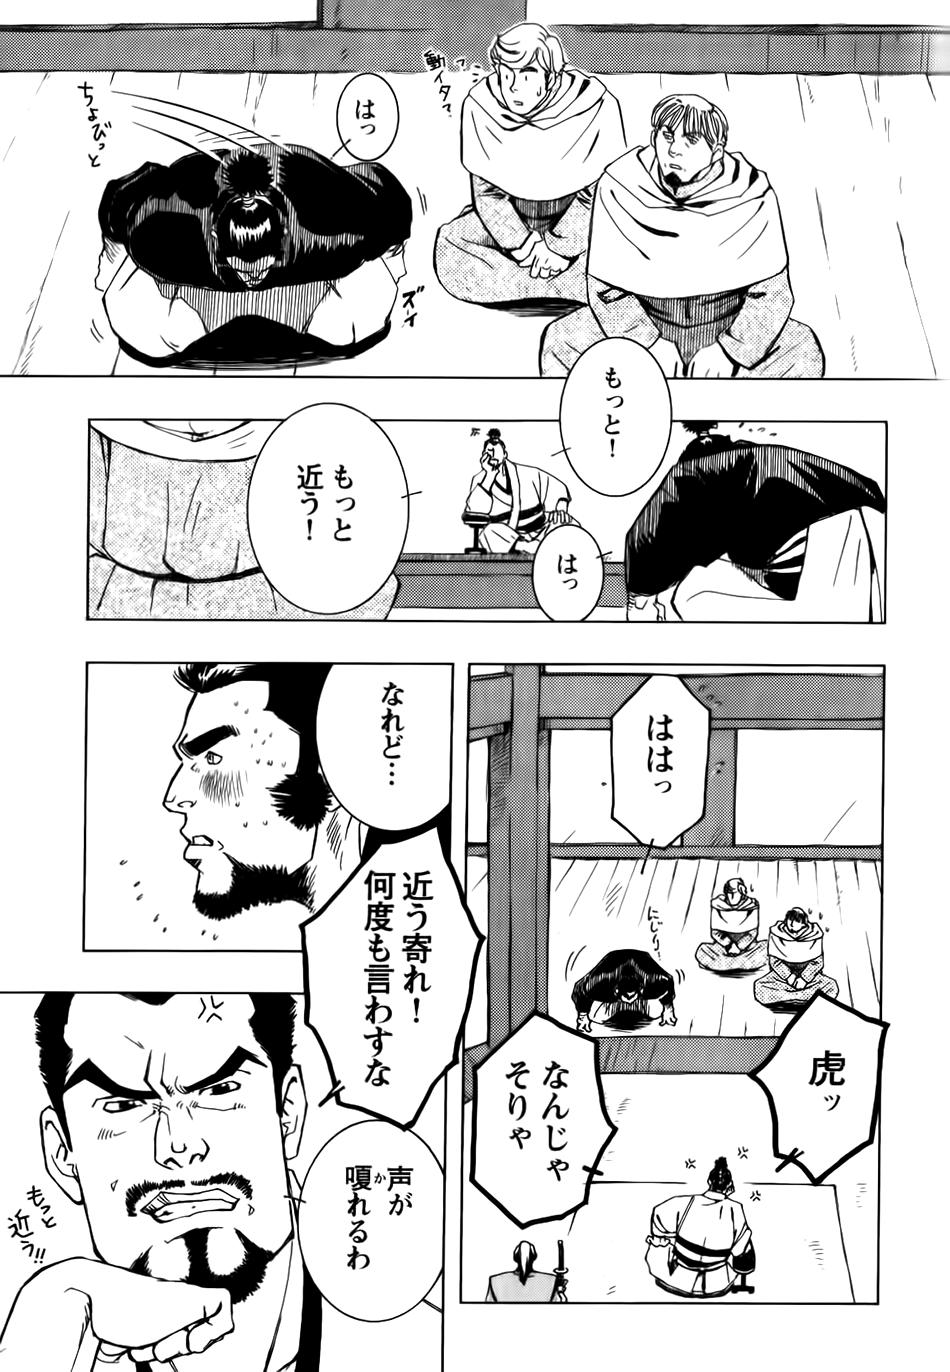 Toilet Nobunaga's lotion man Guys - Page 3